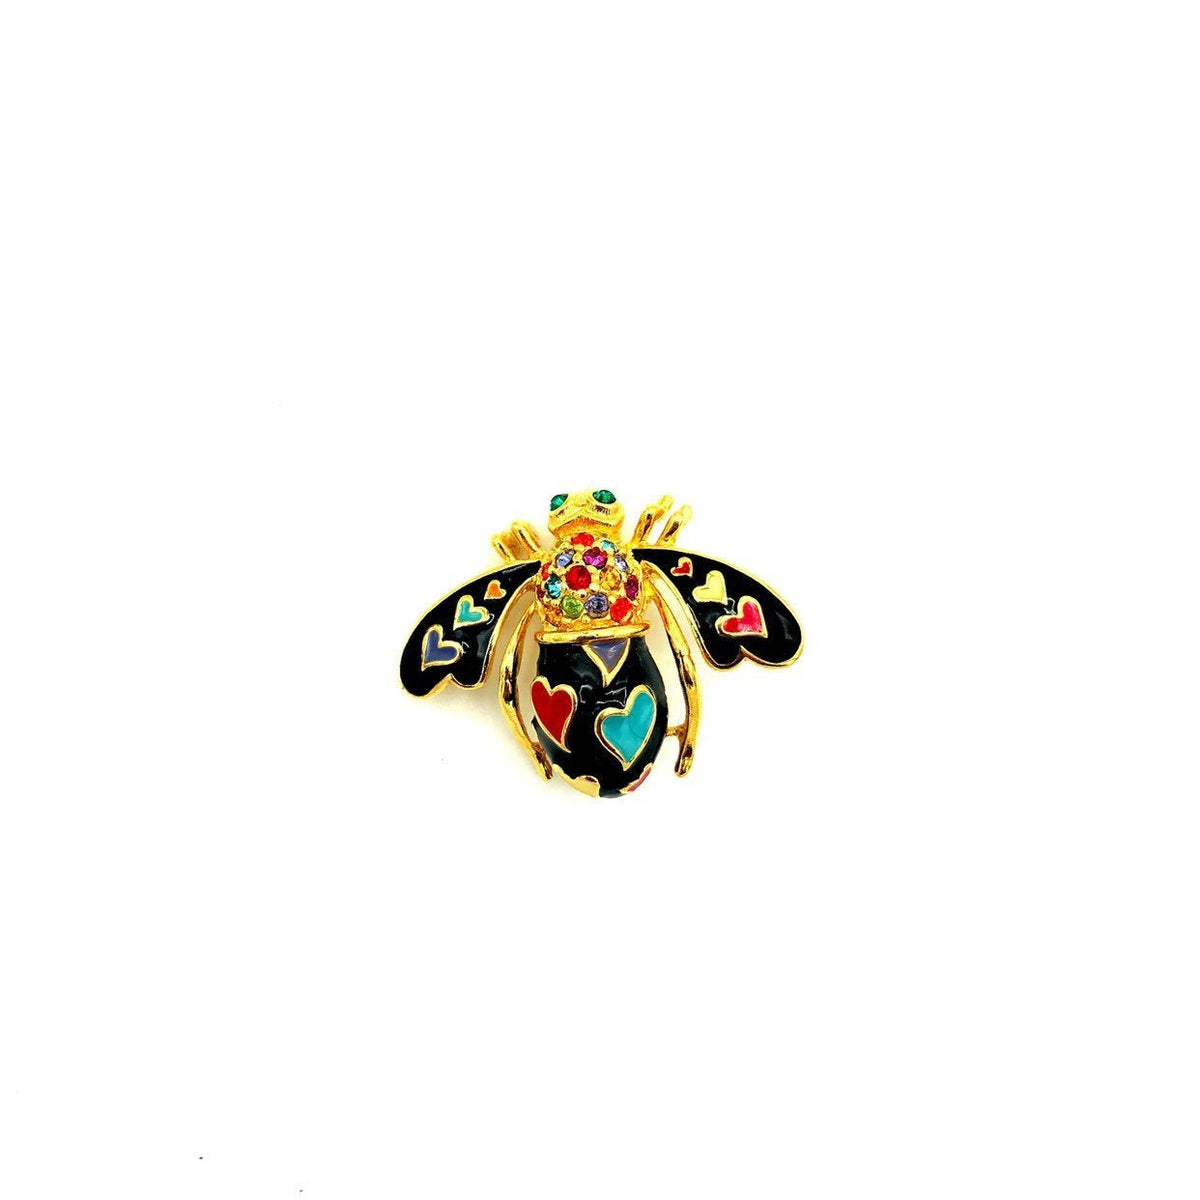 Joan Rivers Petite Black Enamel Hearts & Rhinestone Bee Brooch Pin - 24 Wishes Vintage Jewelry